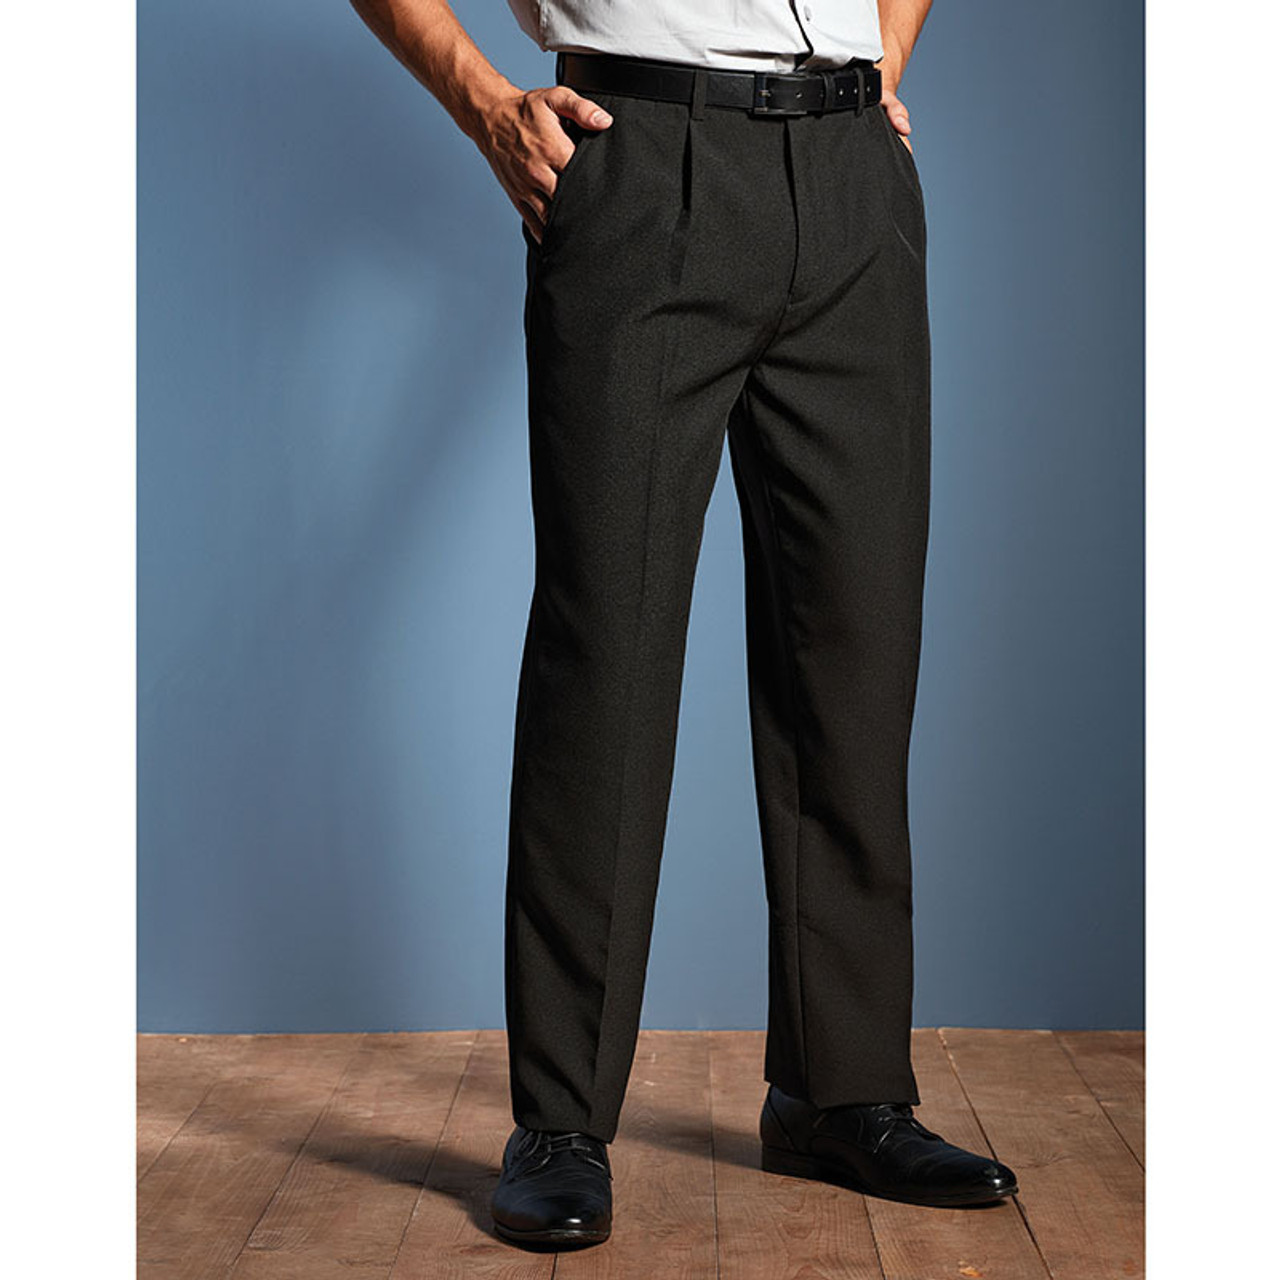 Polyester trousers (single pleat) - Matrix Workwear